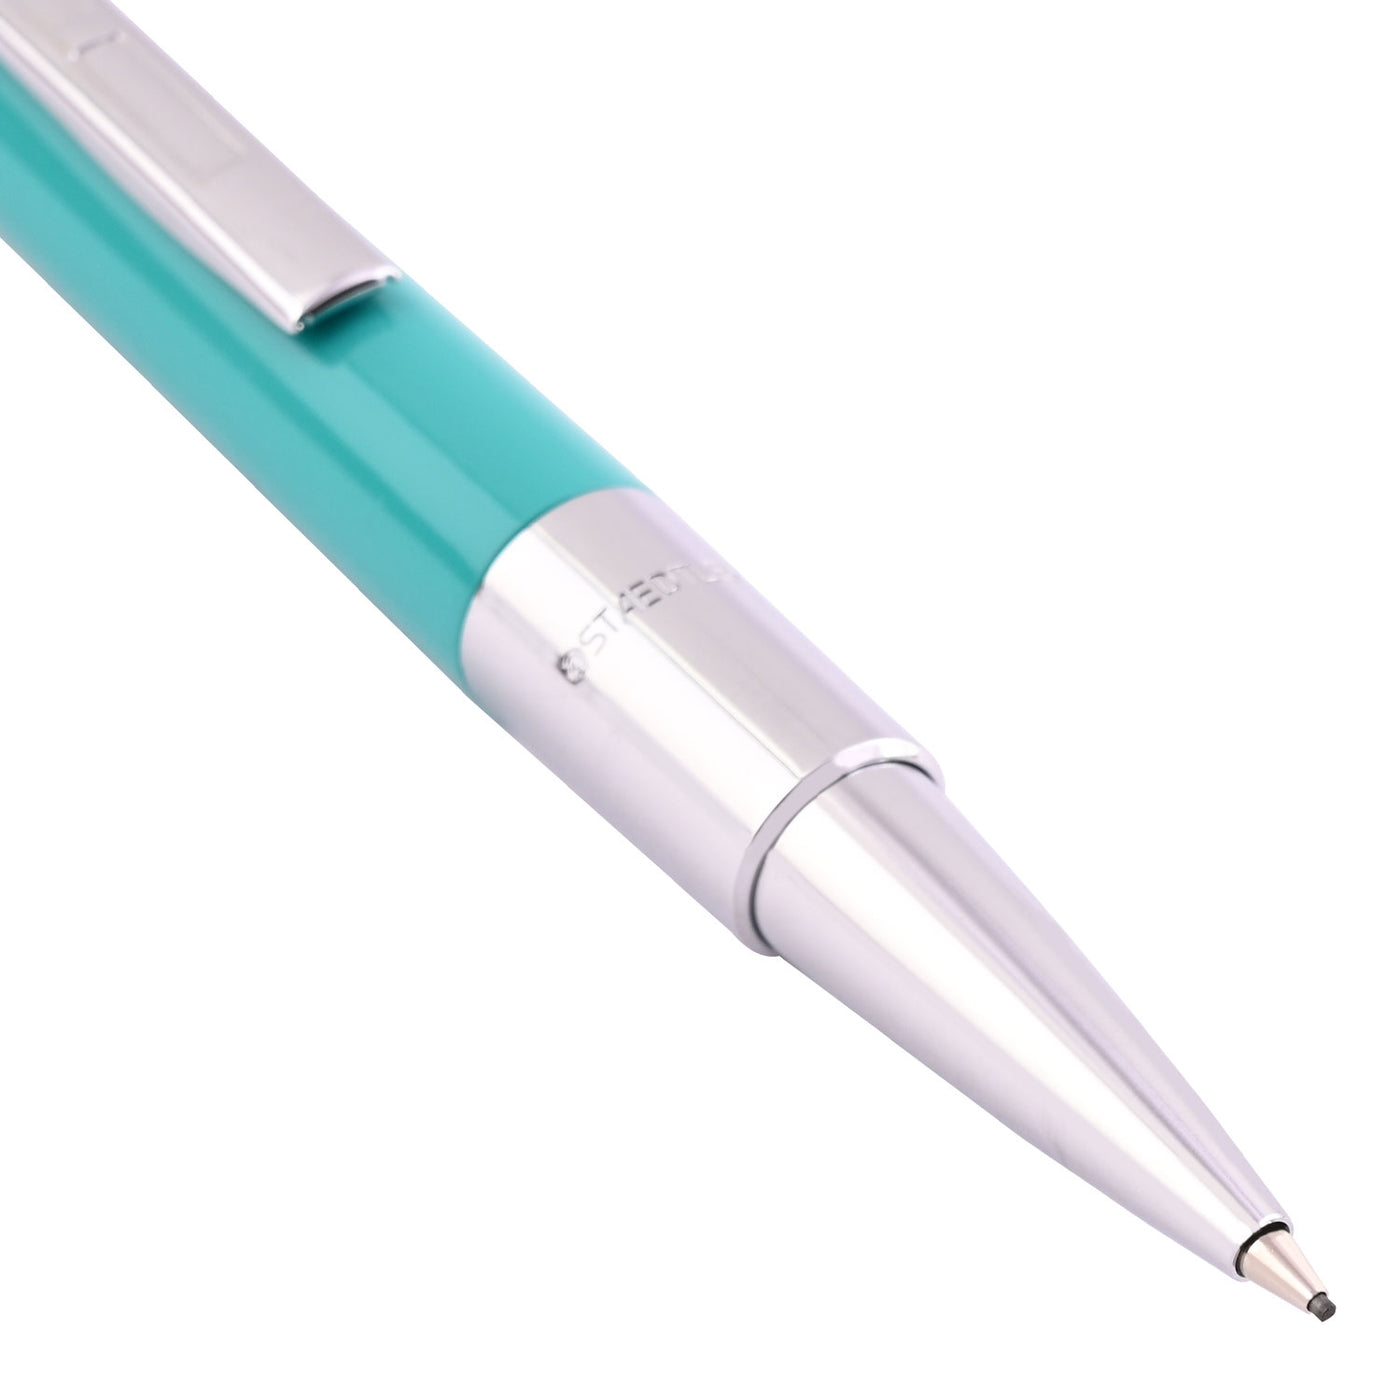 Staedtler Premium Resina 0.7mm Mechanical Pencil - Turquoise CT 2